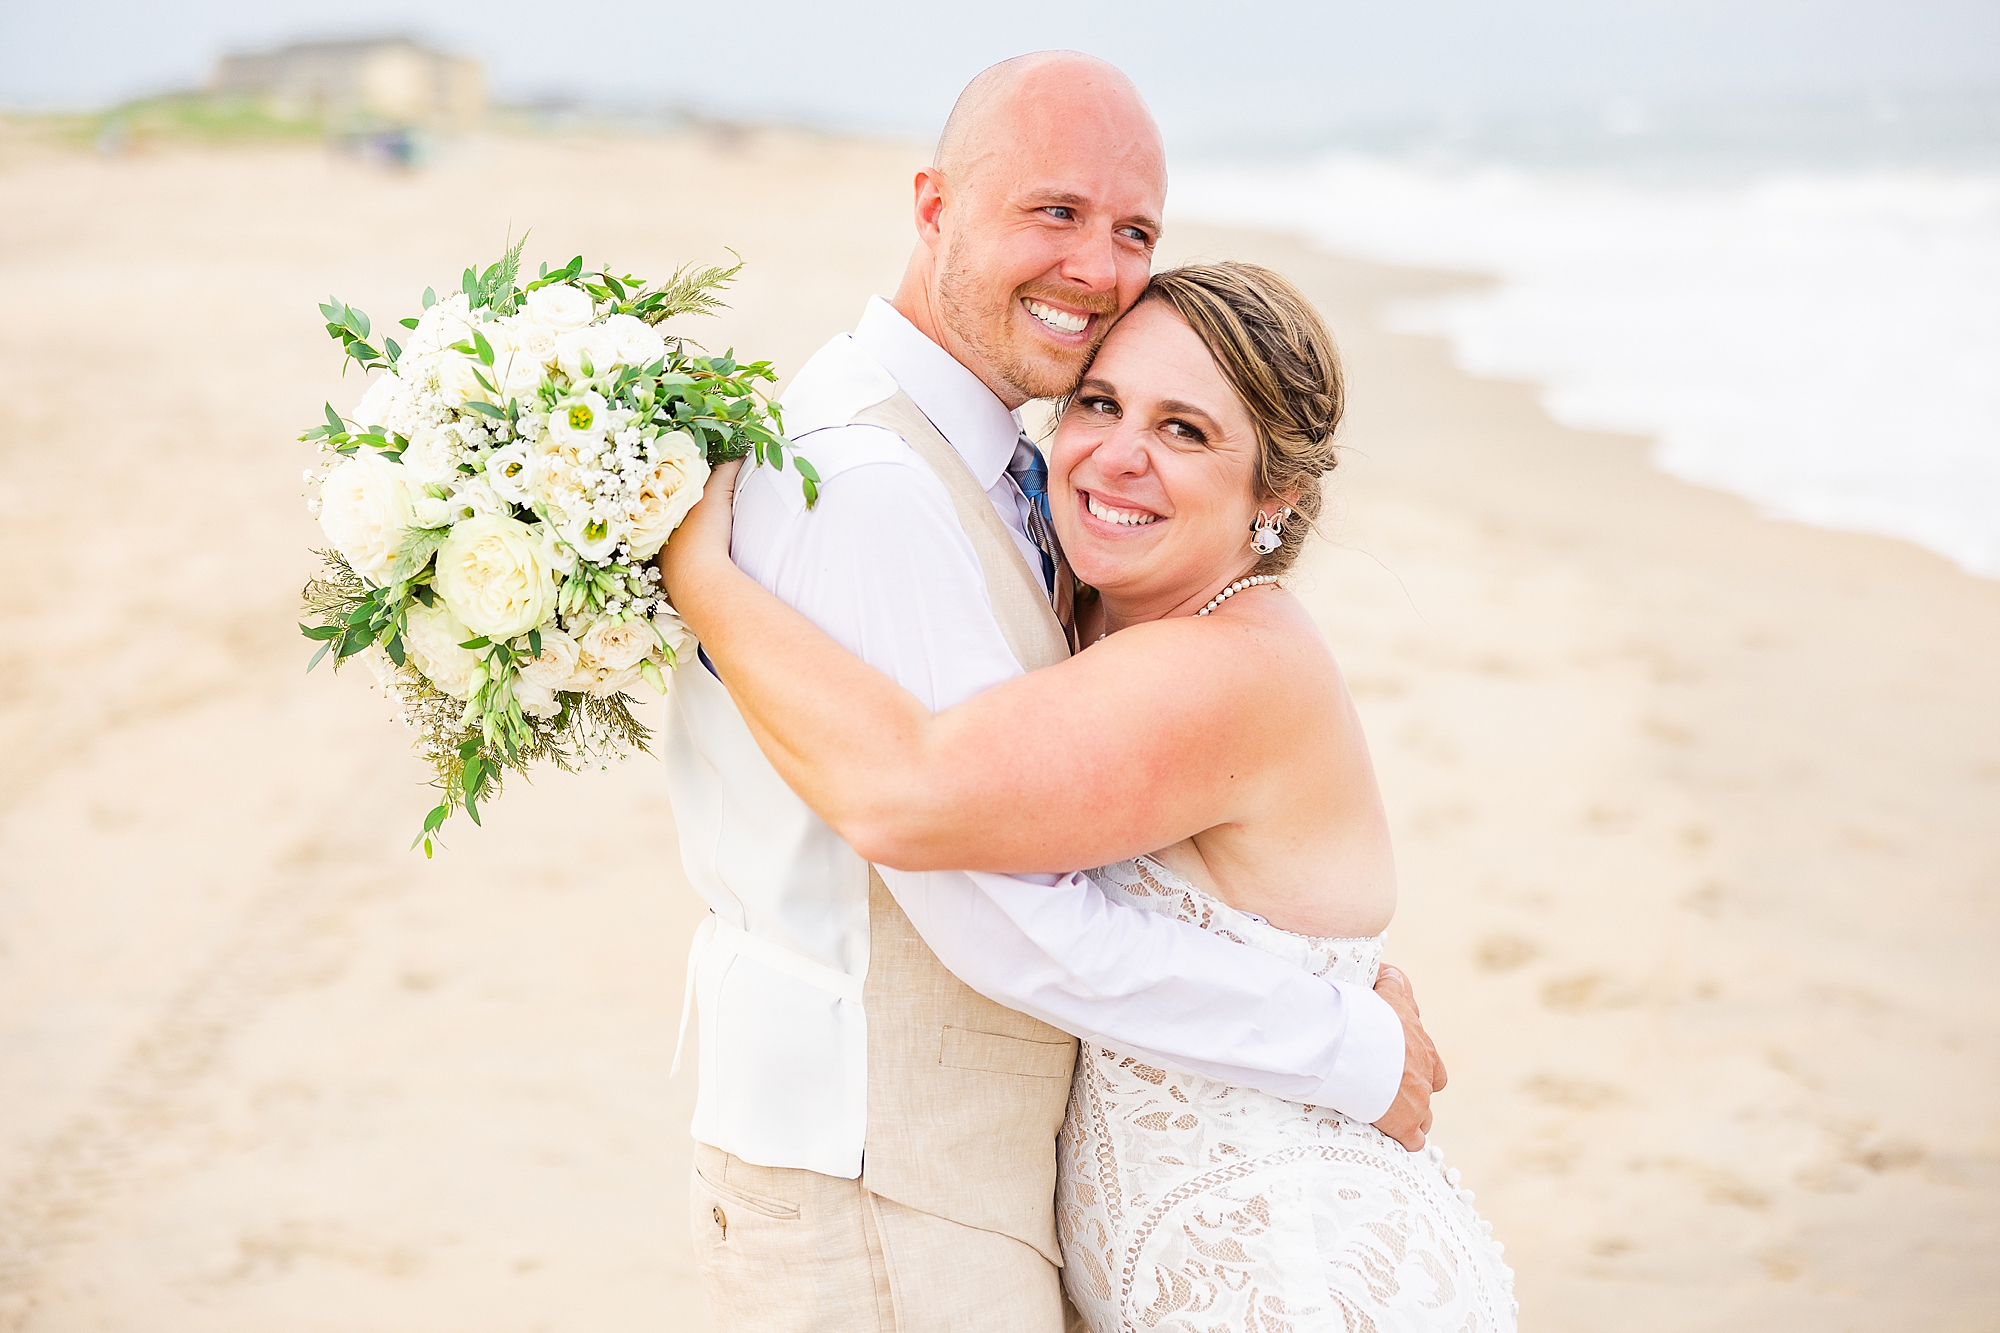 newlyweds hug on beach during portraits at sunset